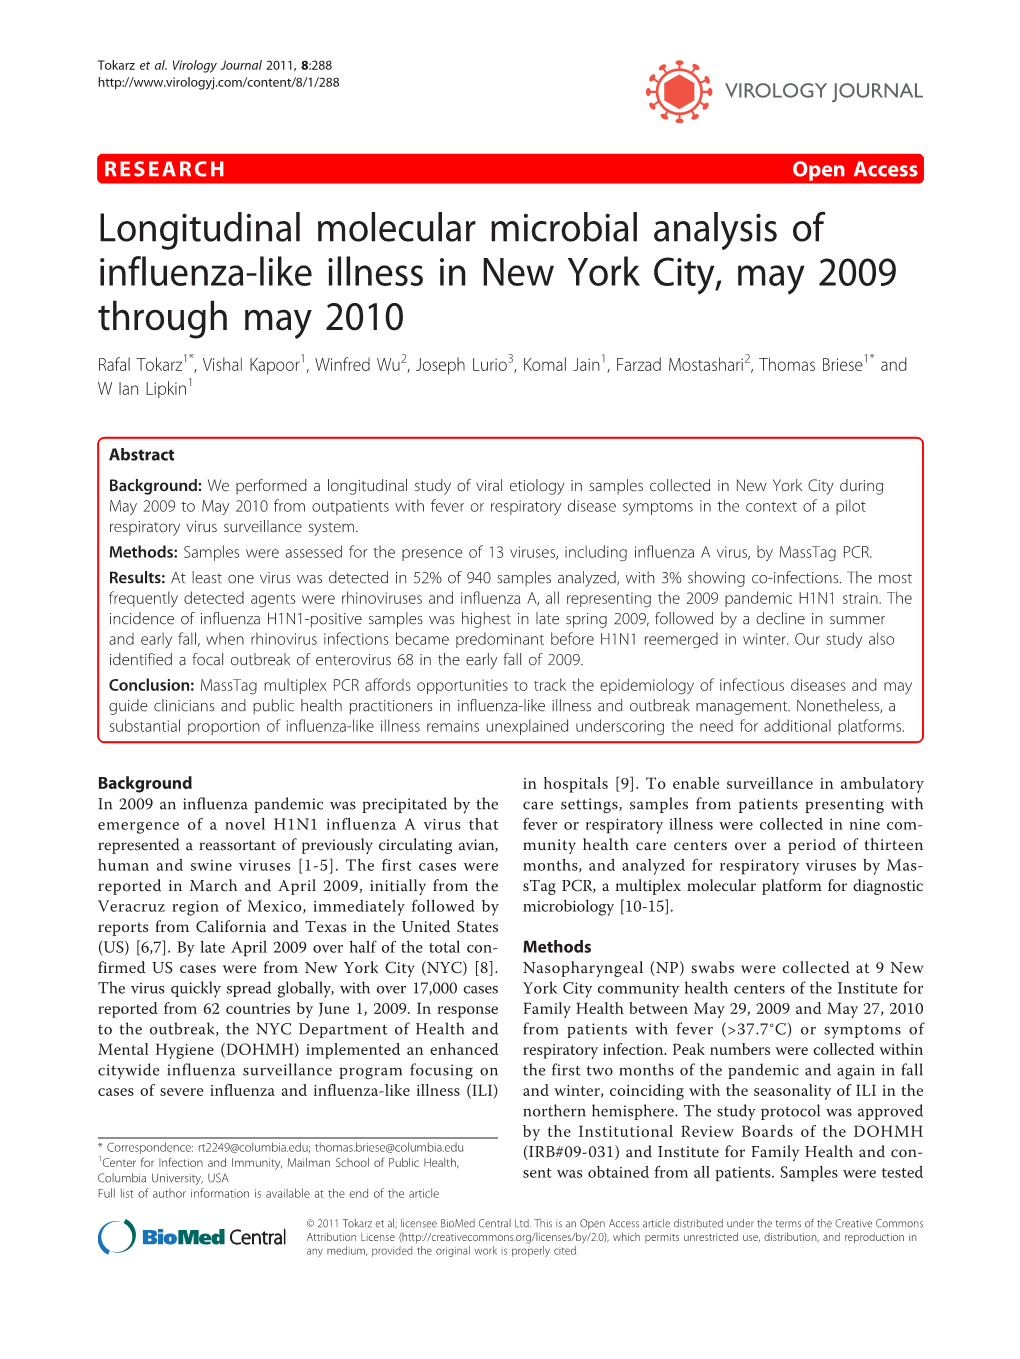 Longitudinal Molecular Microbial Analysis of Influenza-Like Illness In